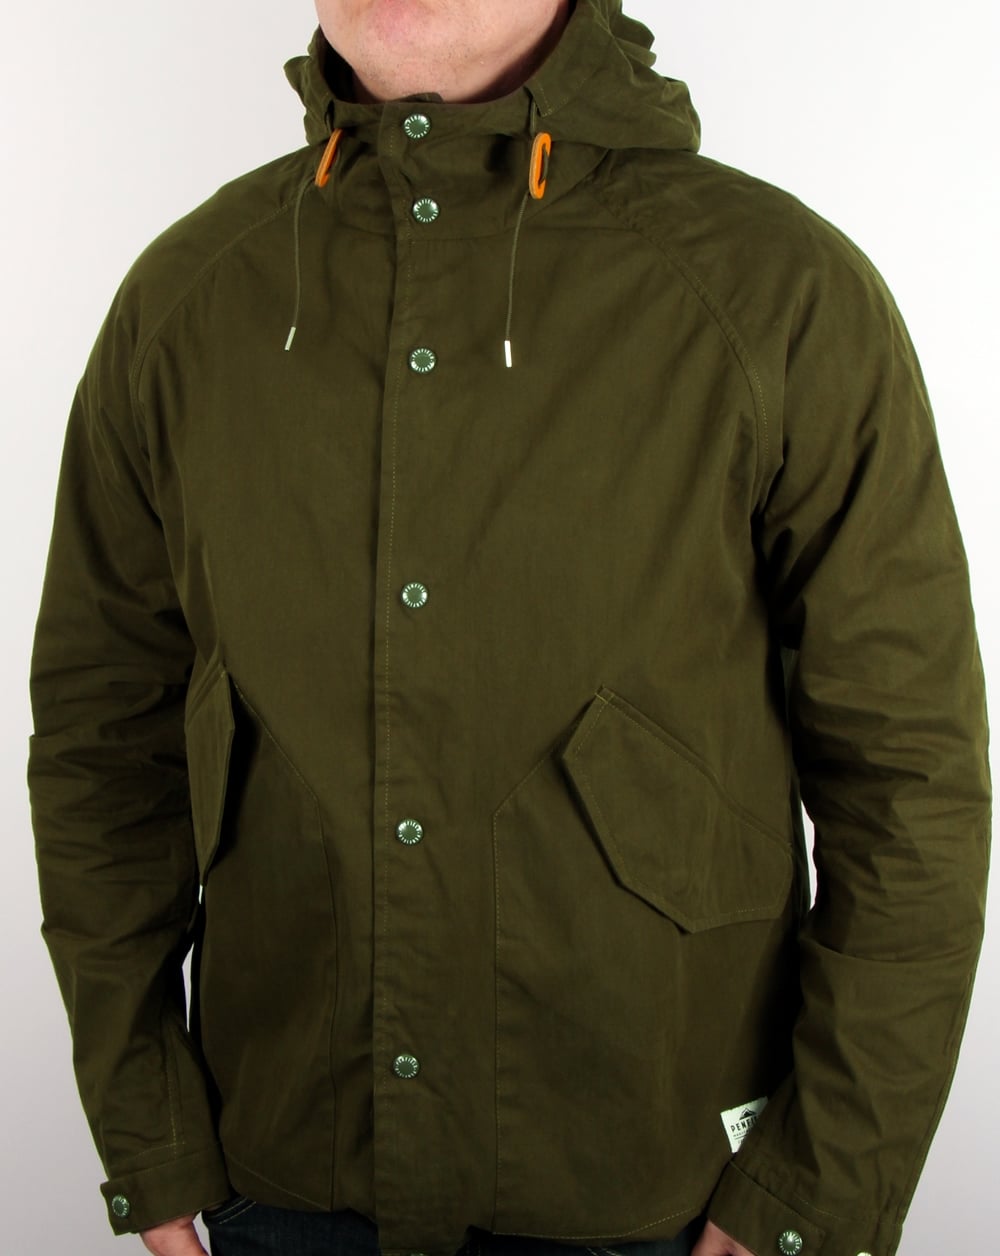 penfield jackets penfield davenport jacket olive ... pquzcxc